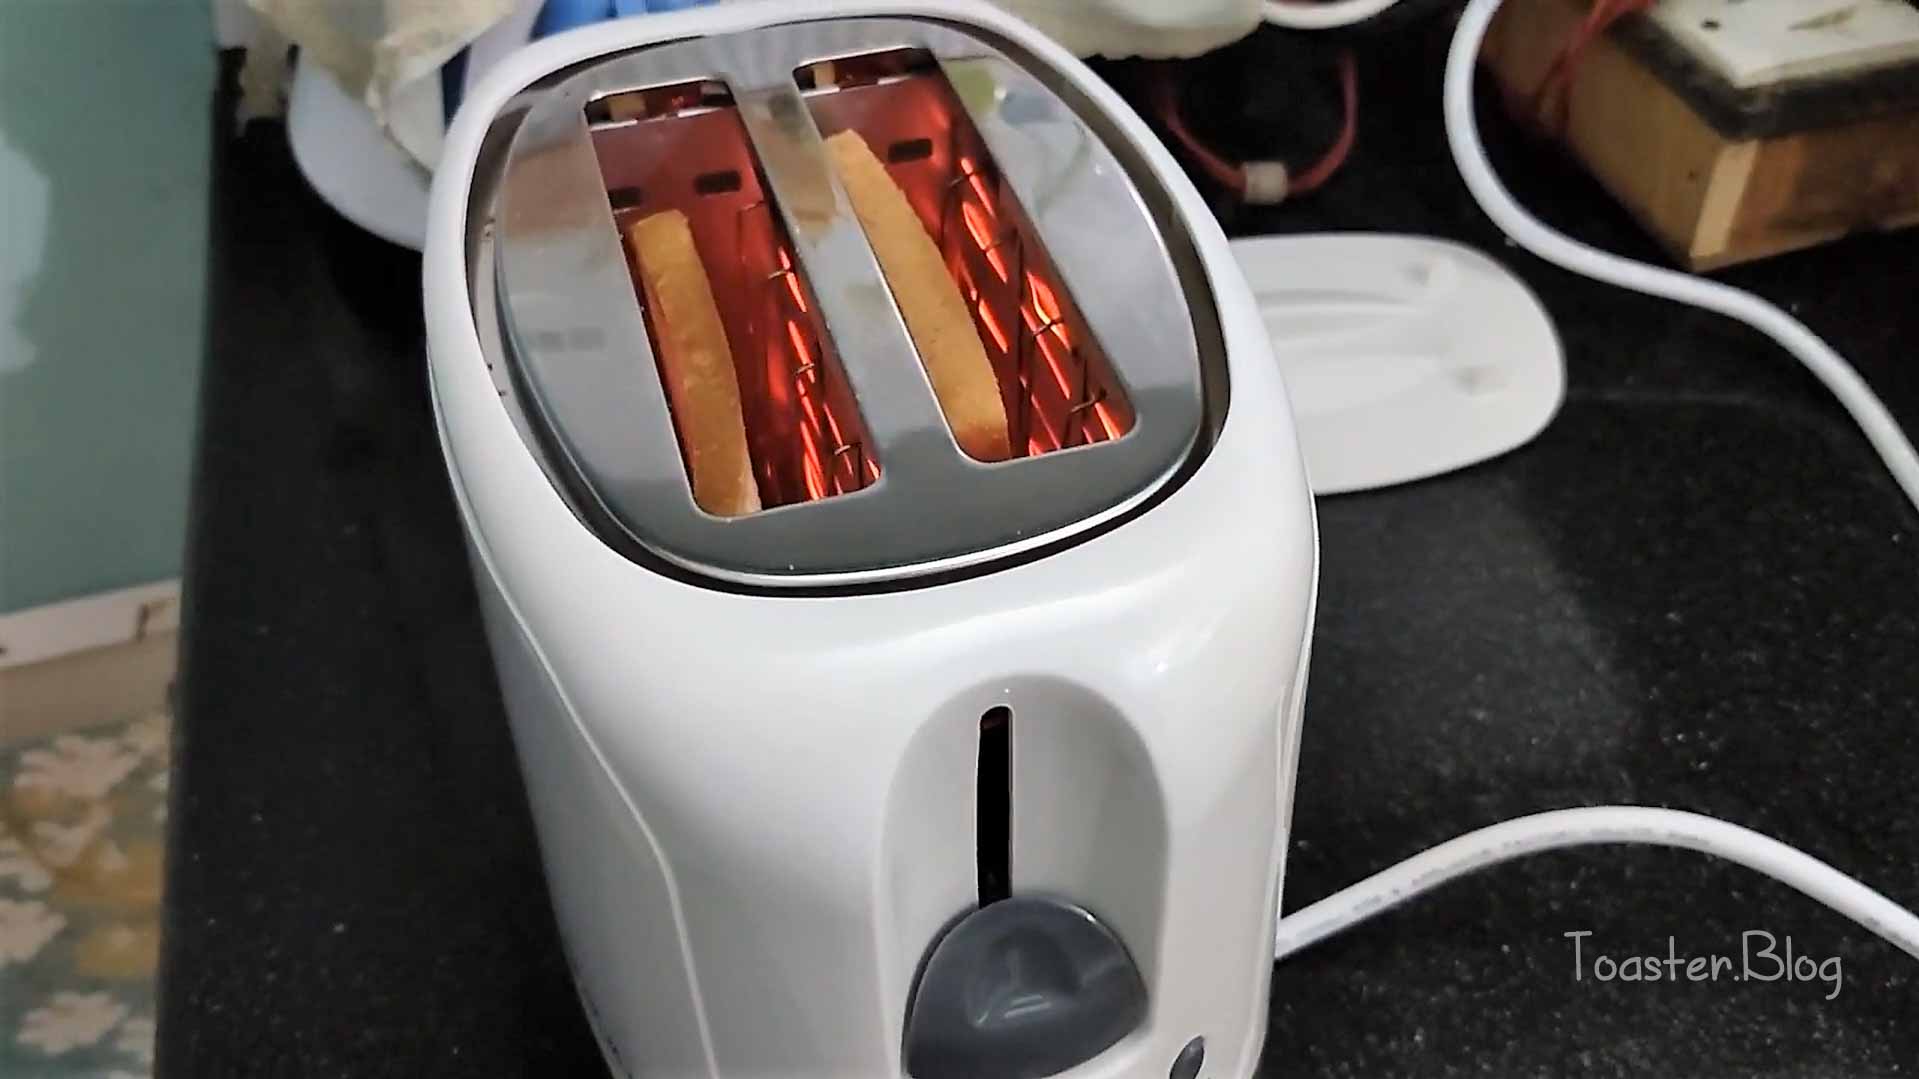 Best nice toaster